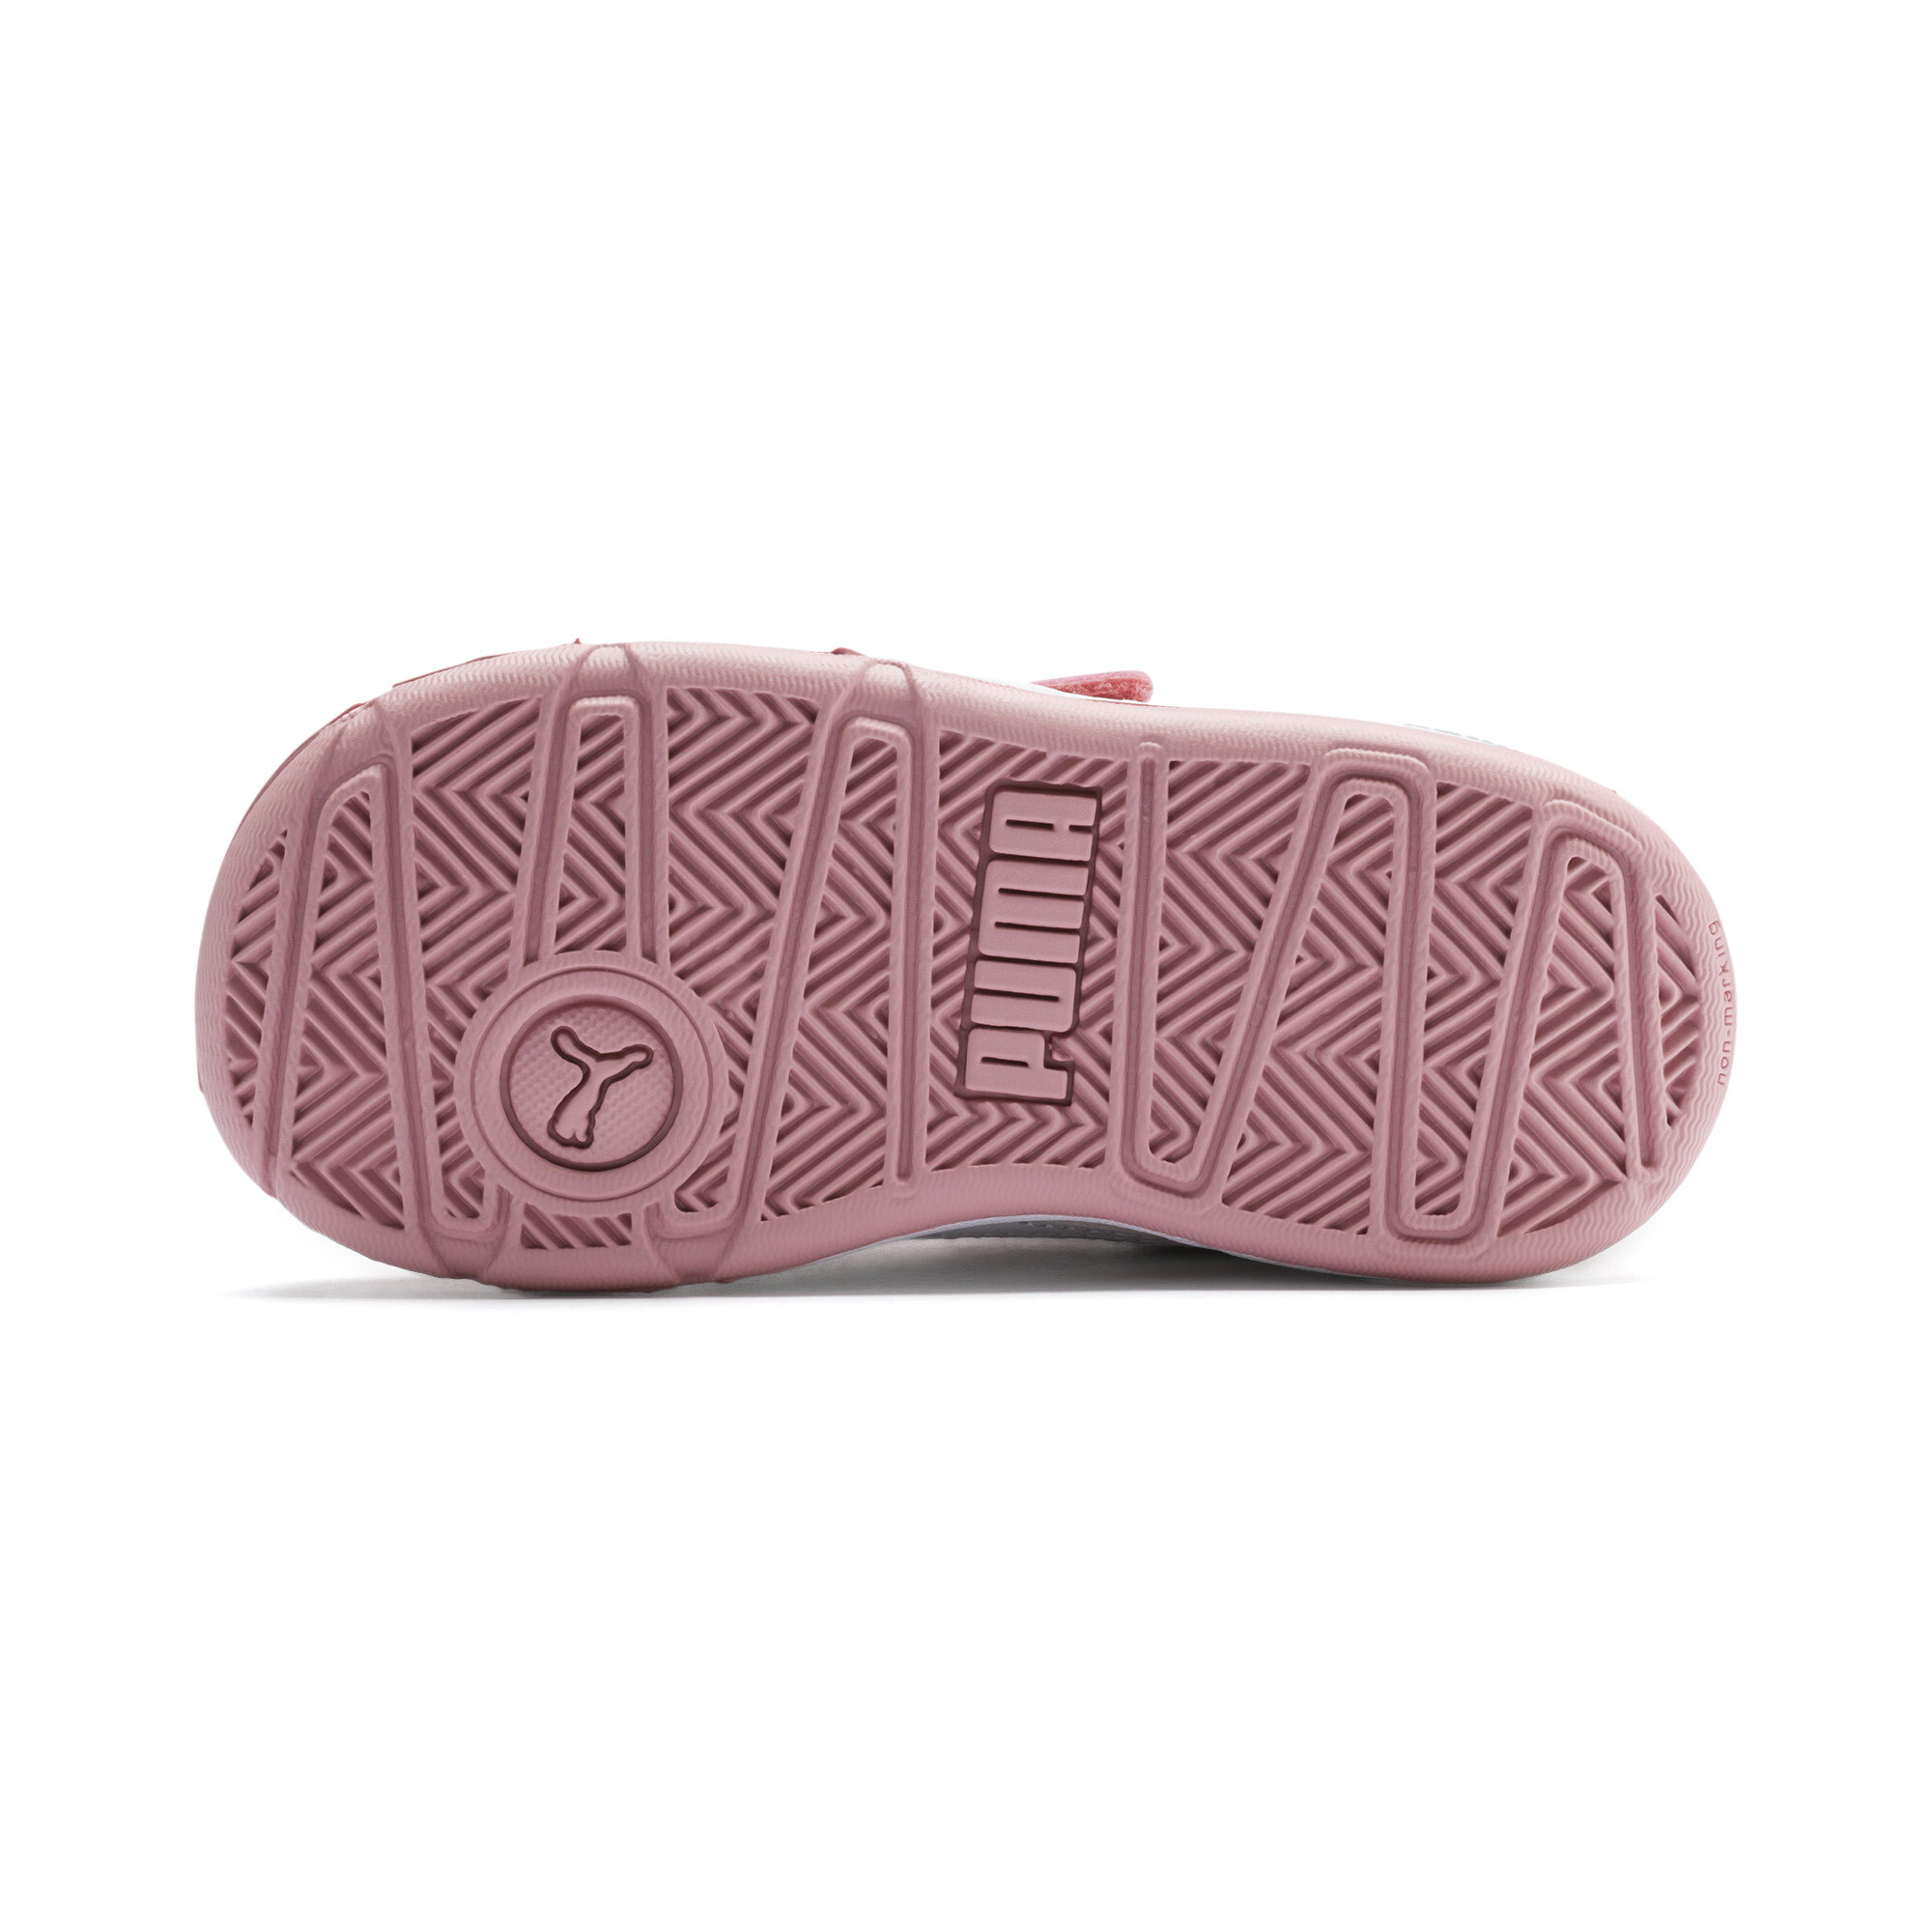 Puma Stepfleex 2 SL VE V Babies' Trainers, Pink, Size 27, Shoes